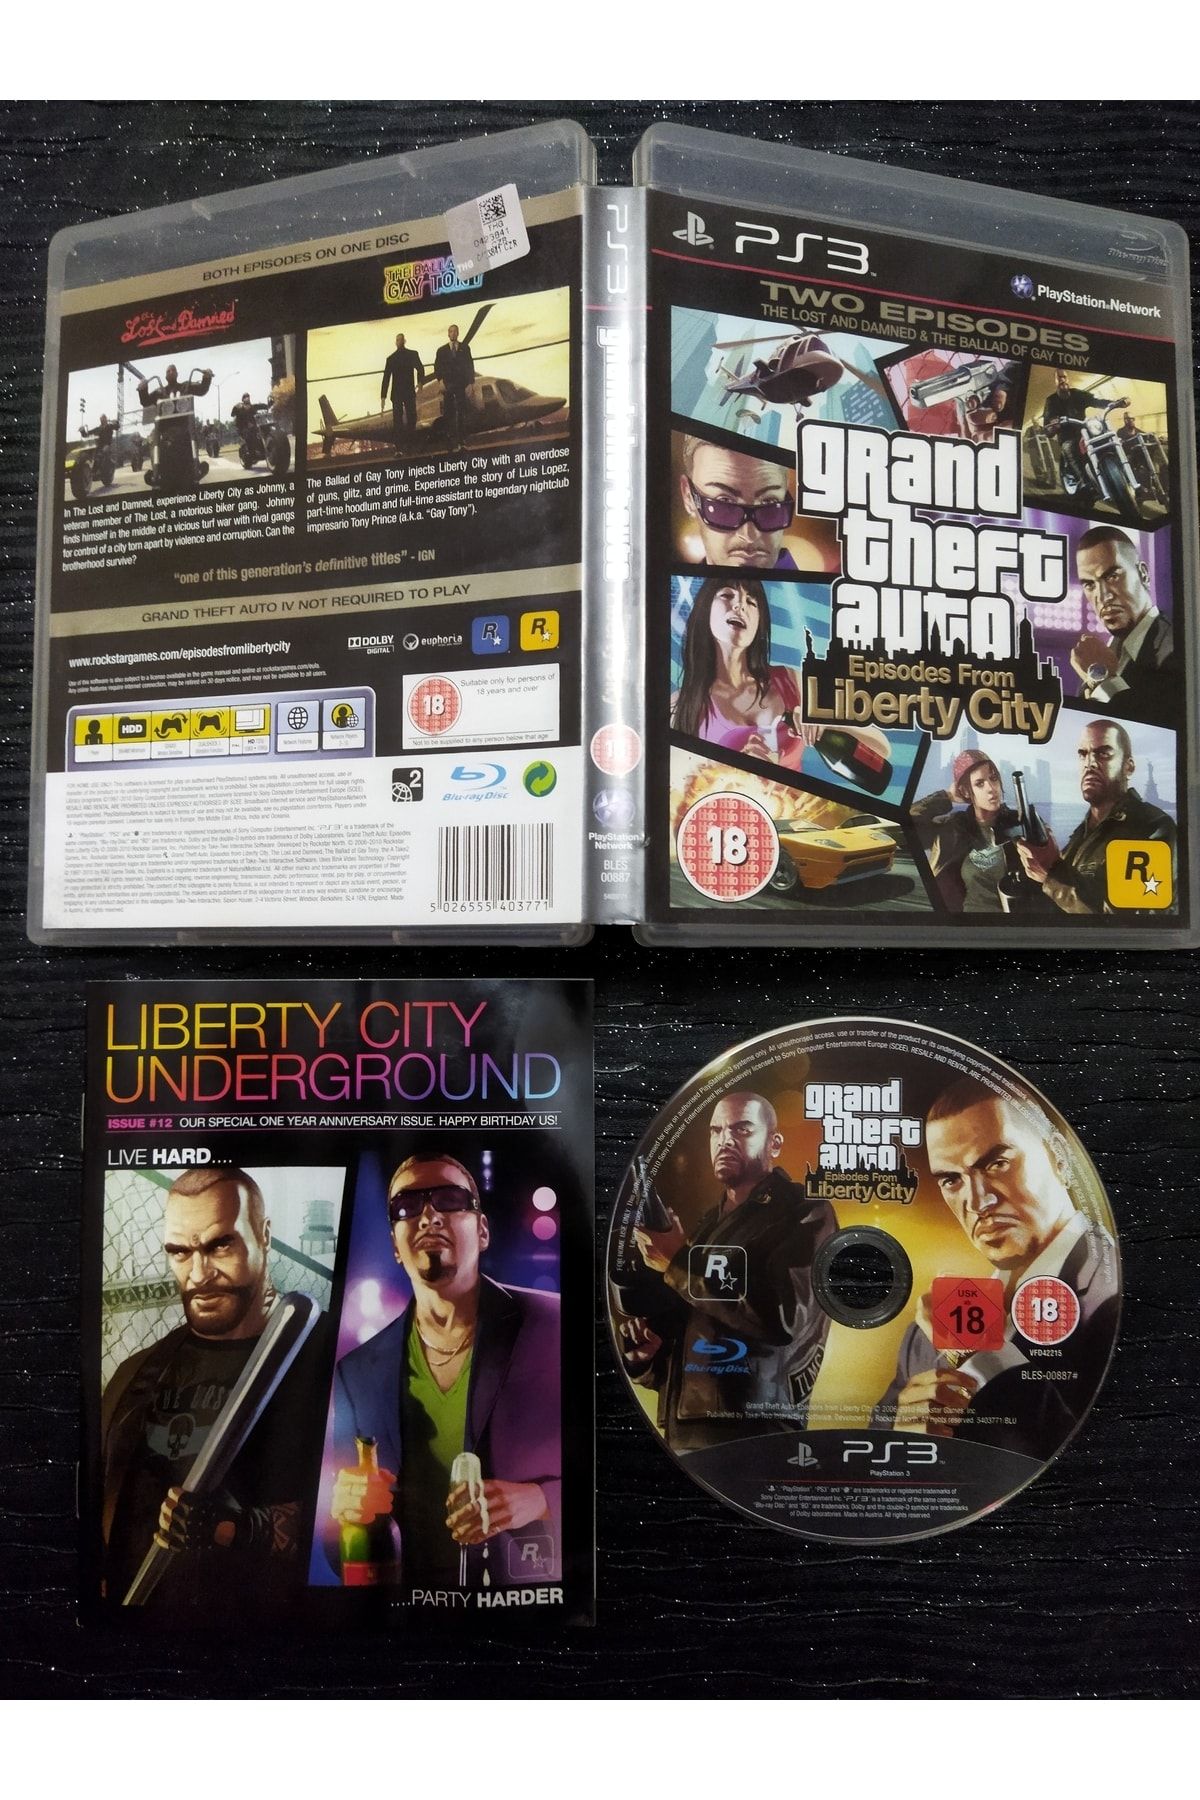 RockStar Games Gta - Episodes From Liberty City